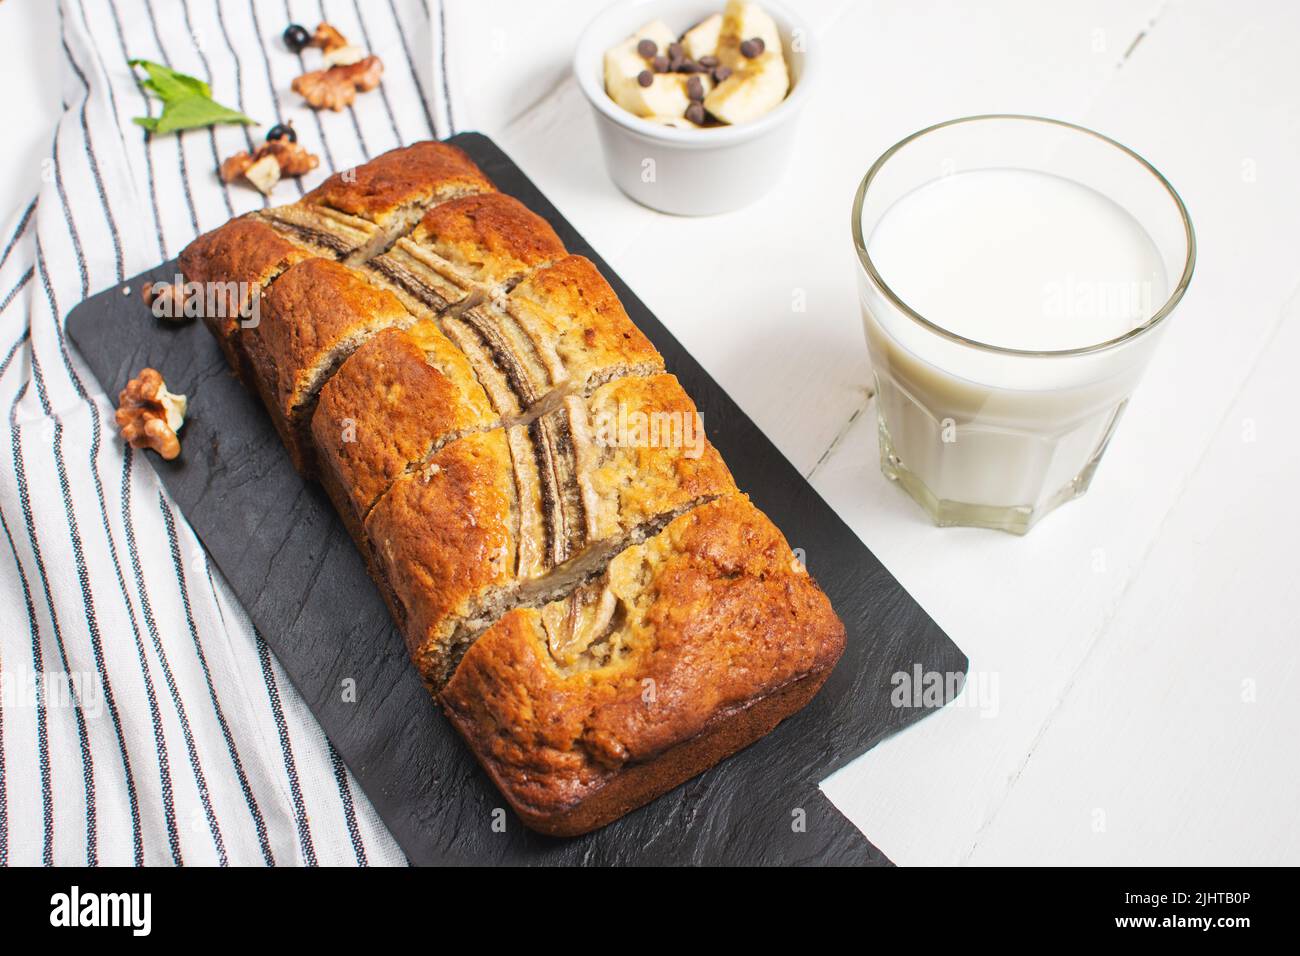 Banana bread or cake on white wooden table. Delicious homemade dessert, tasty snack or morning breakfast. Stock Photo